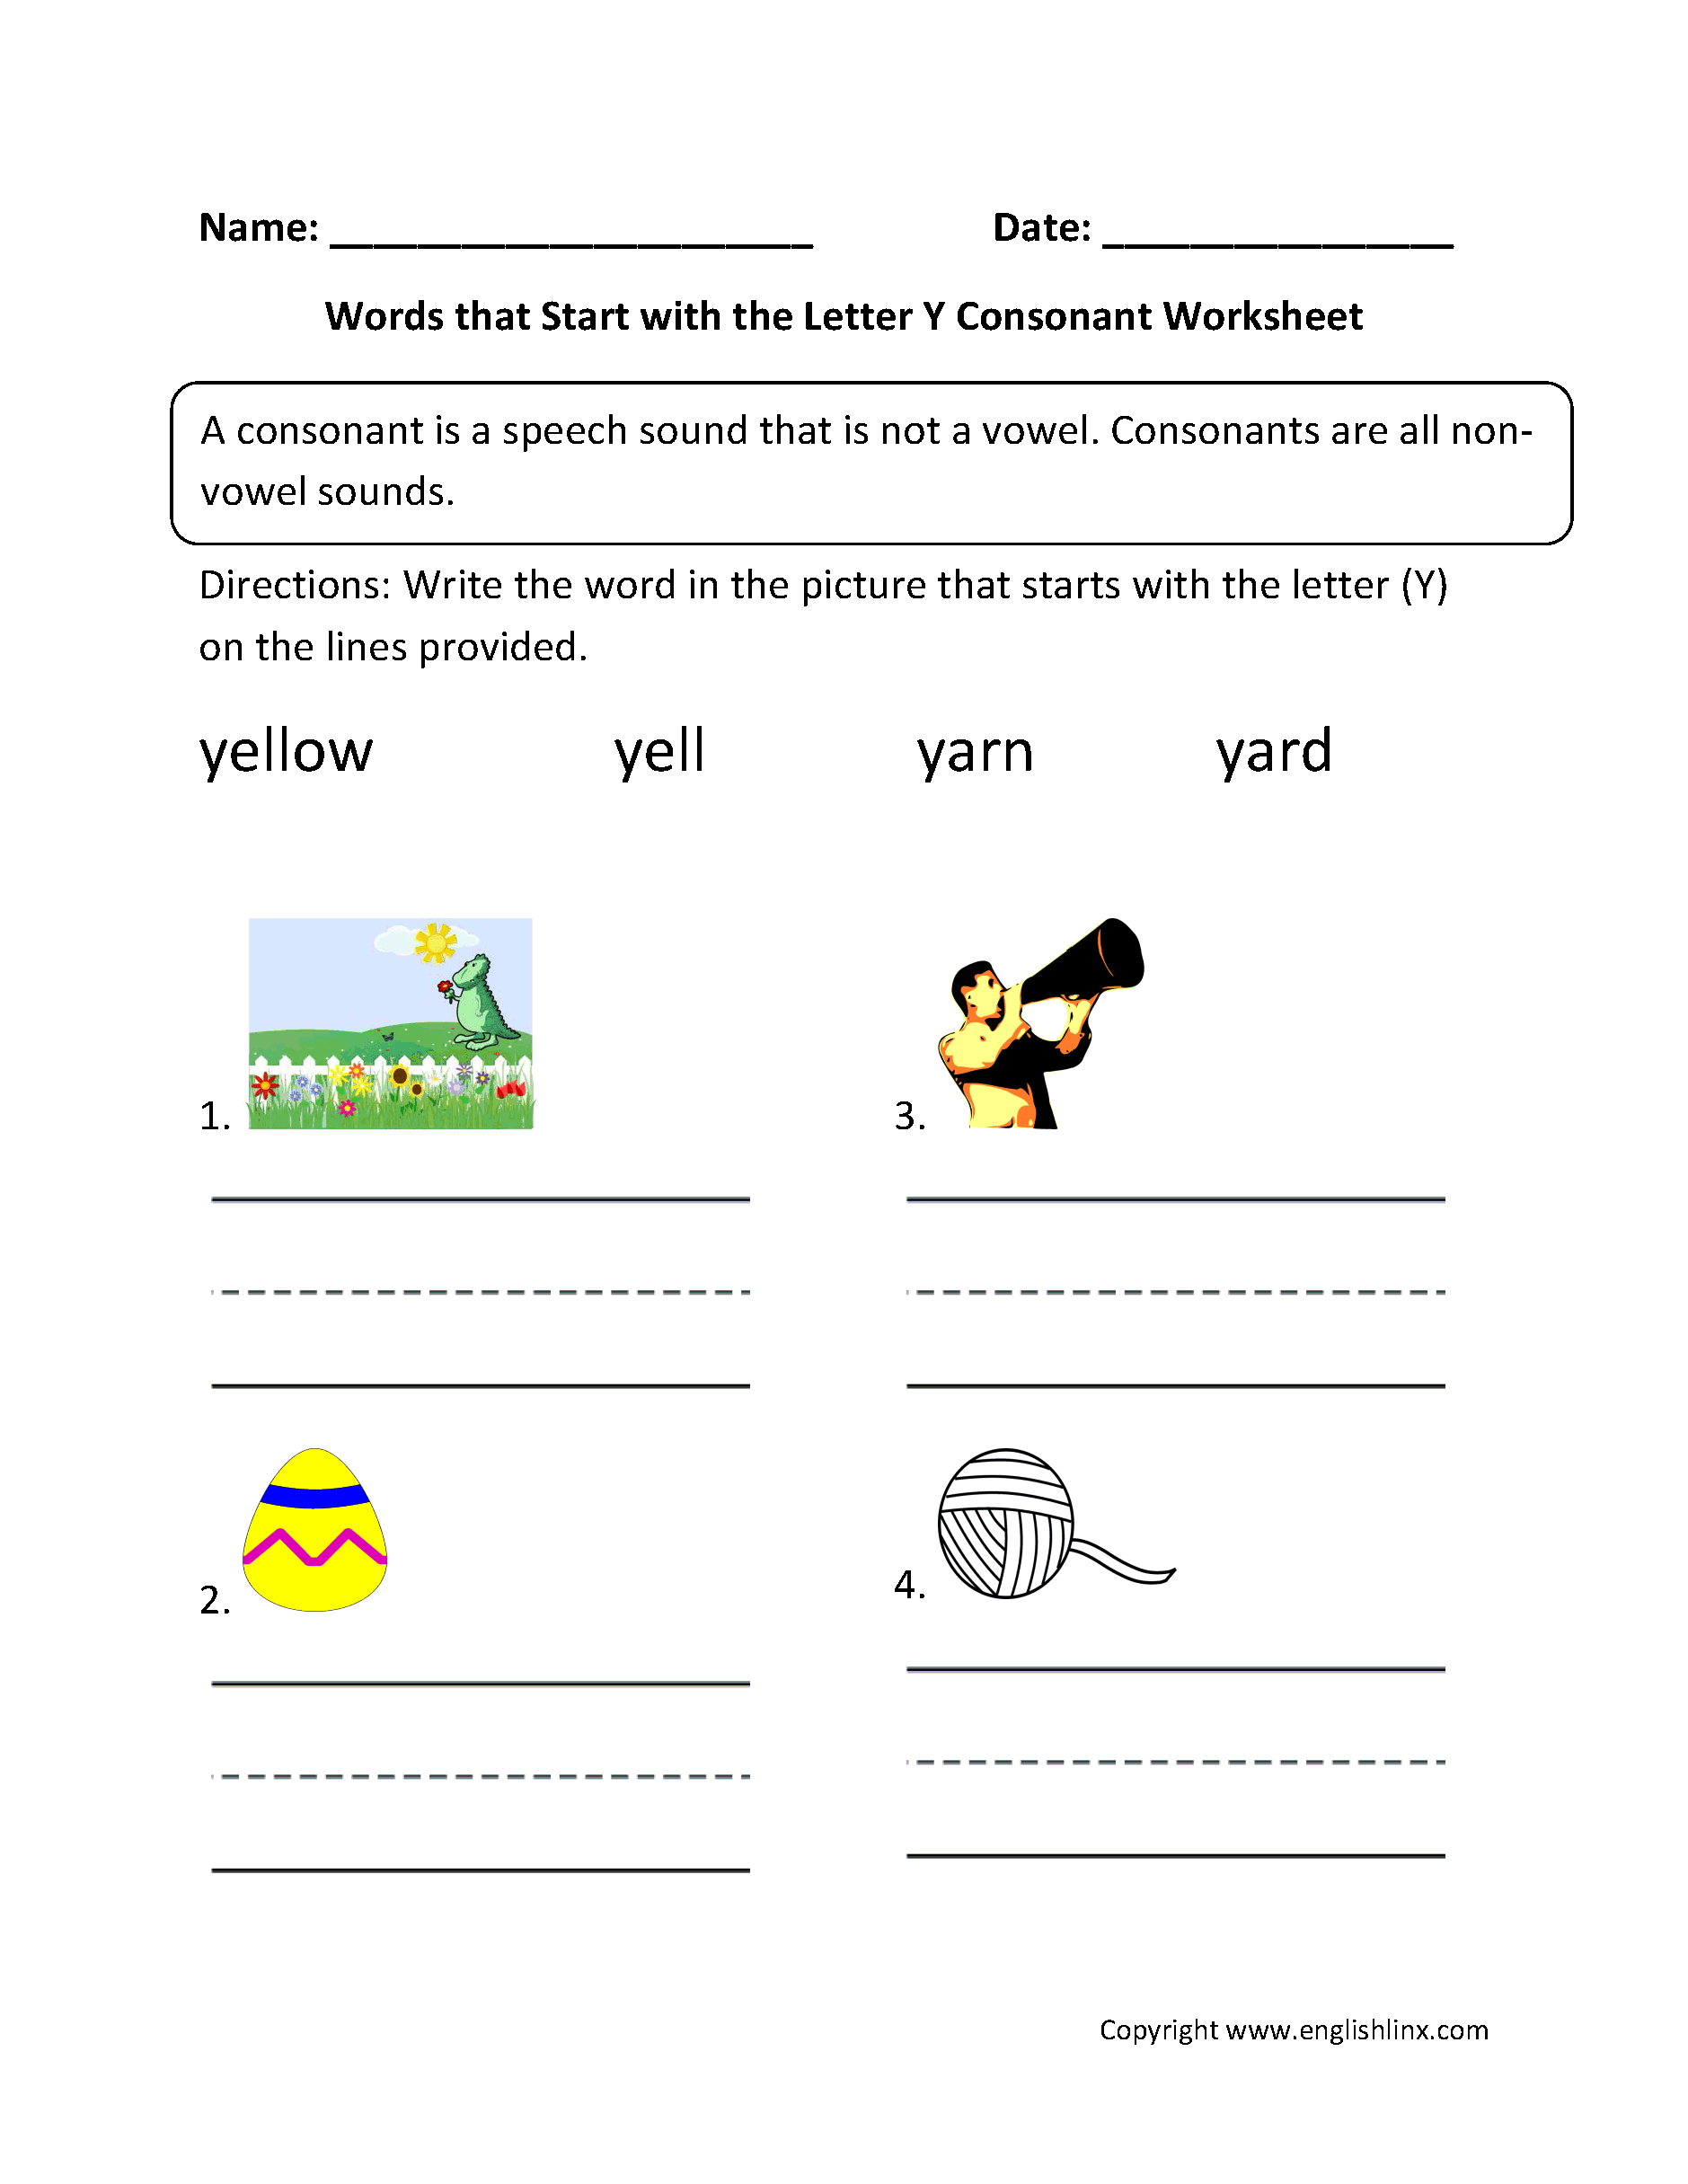 Words Start Letter Y Consonant Worksheets